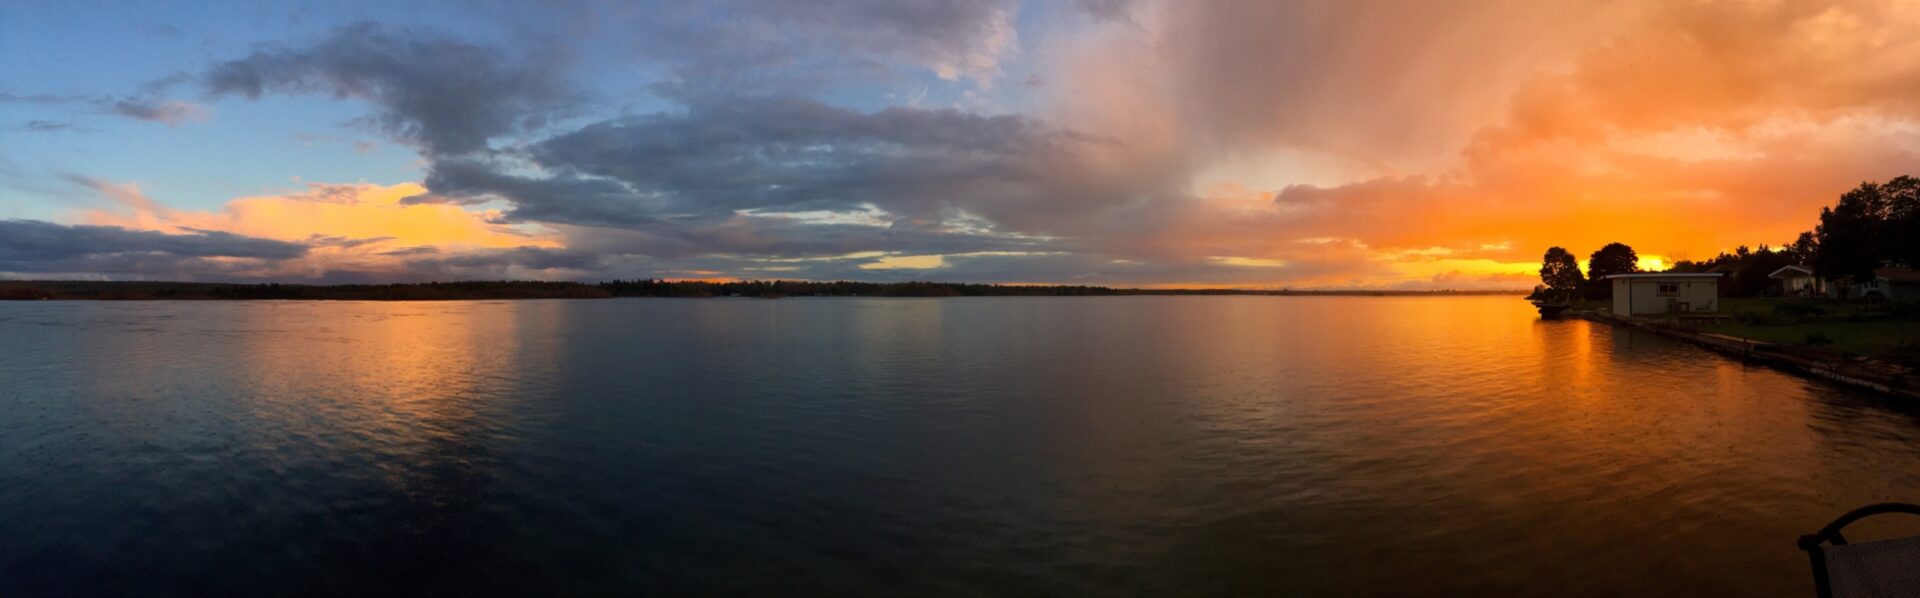 Panoramic image of sunset on a lake